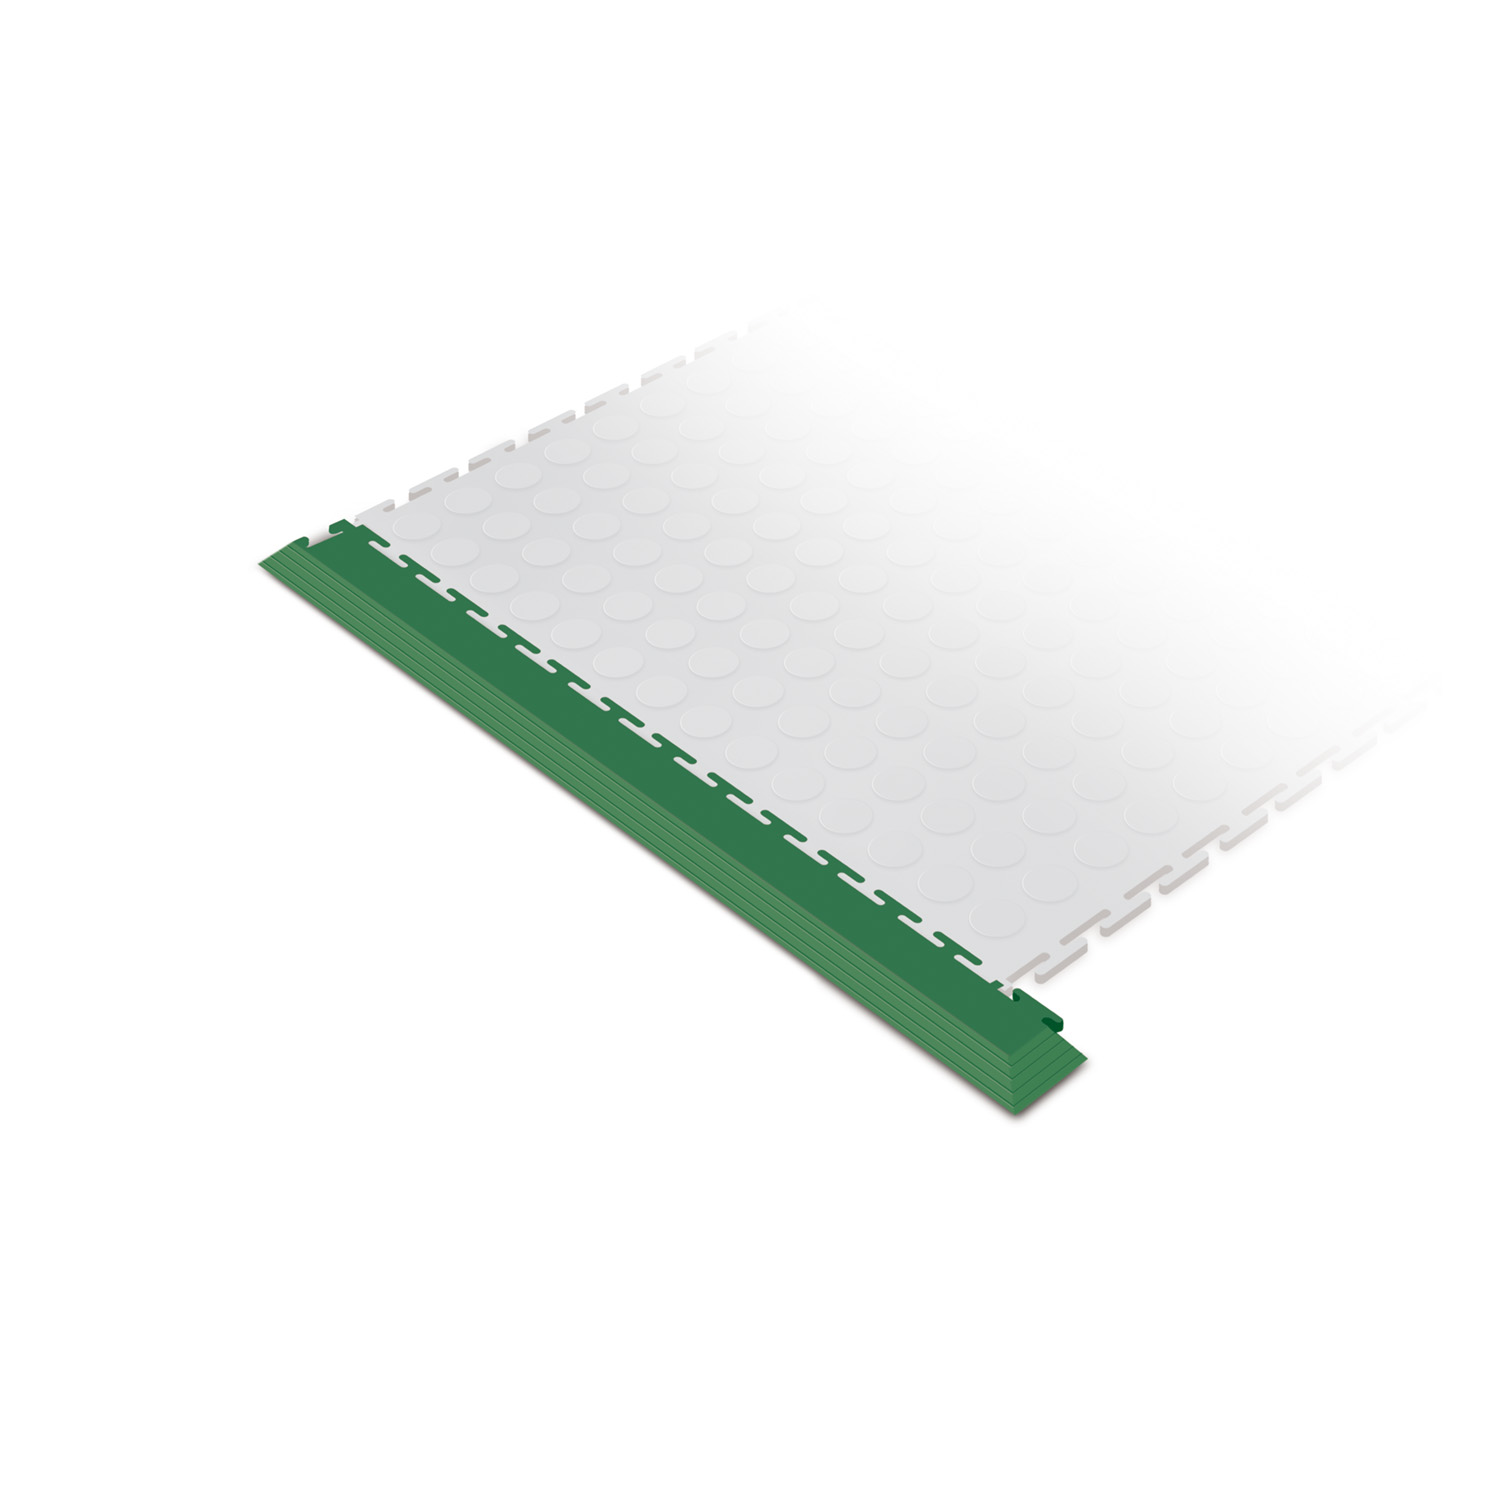 Standard corner edge ramp tile (green)